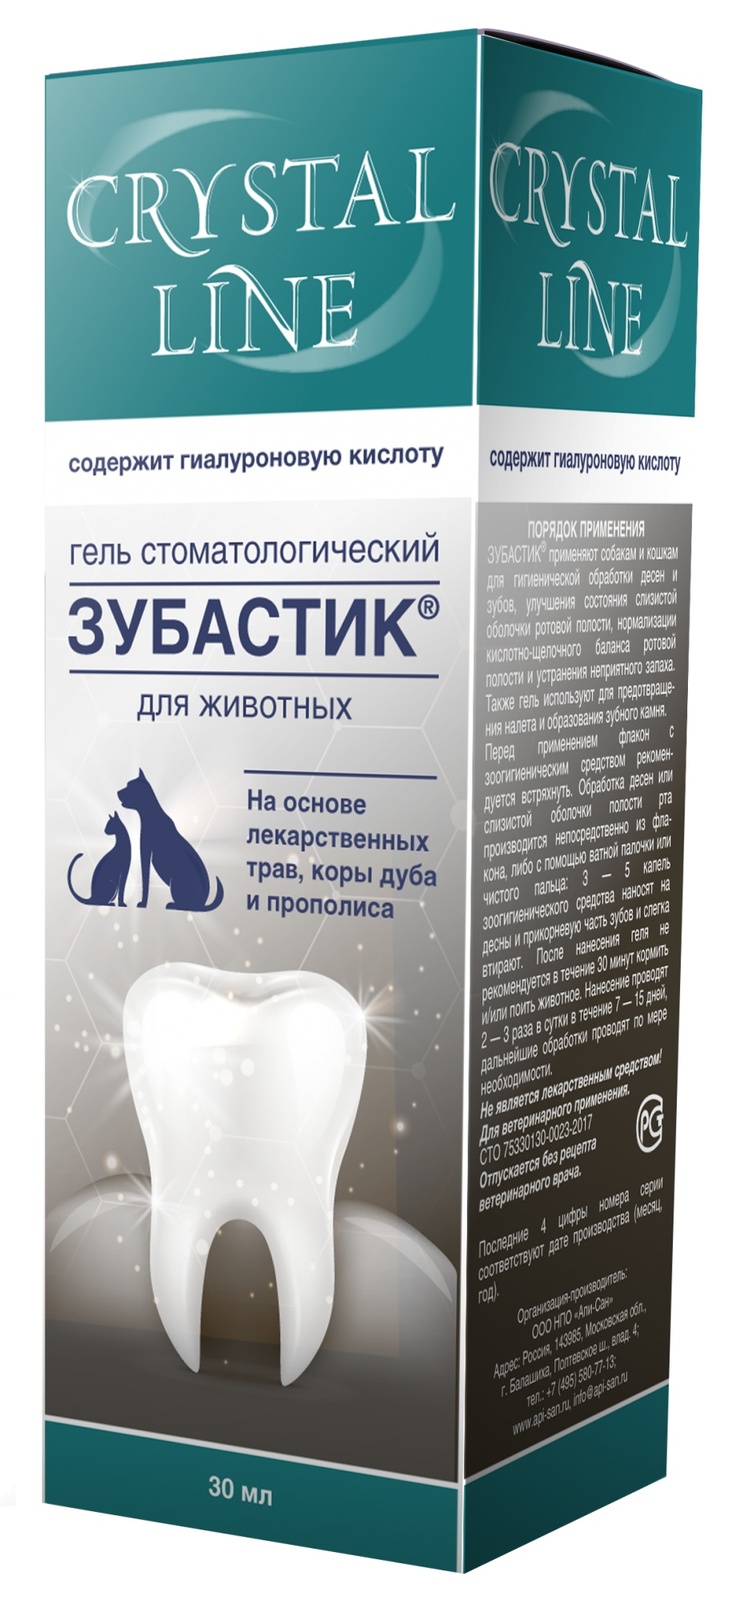 Apicenna Apicenna зубастик гель для чистки зубов Crystal line (30 г)